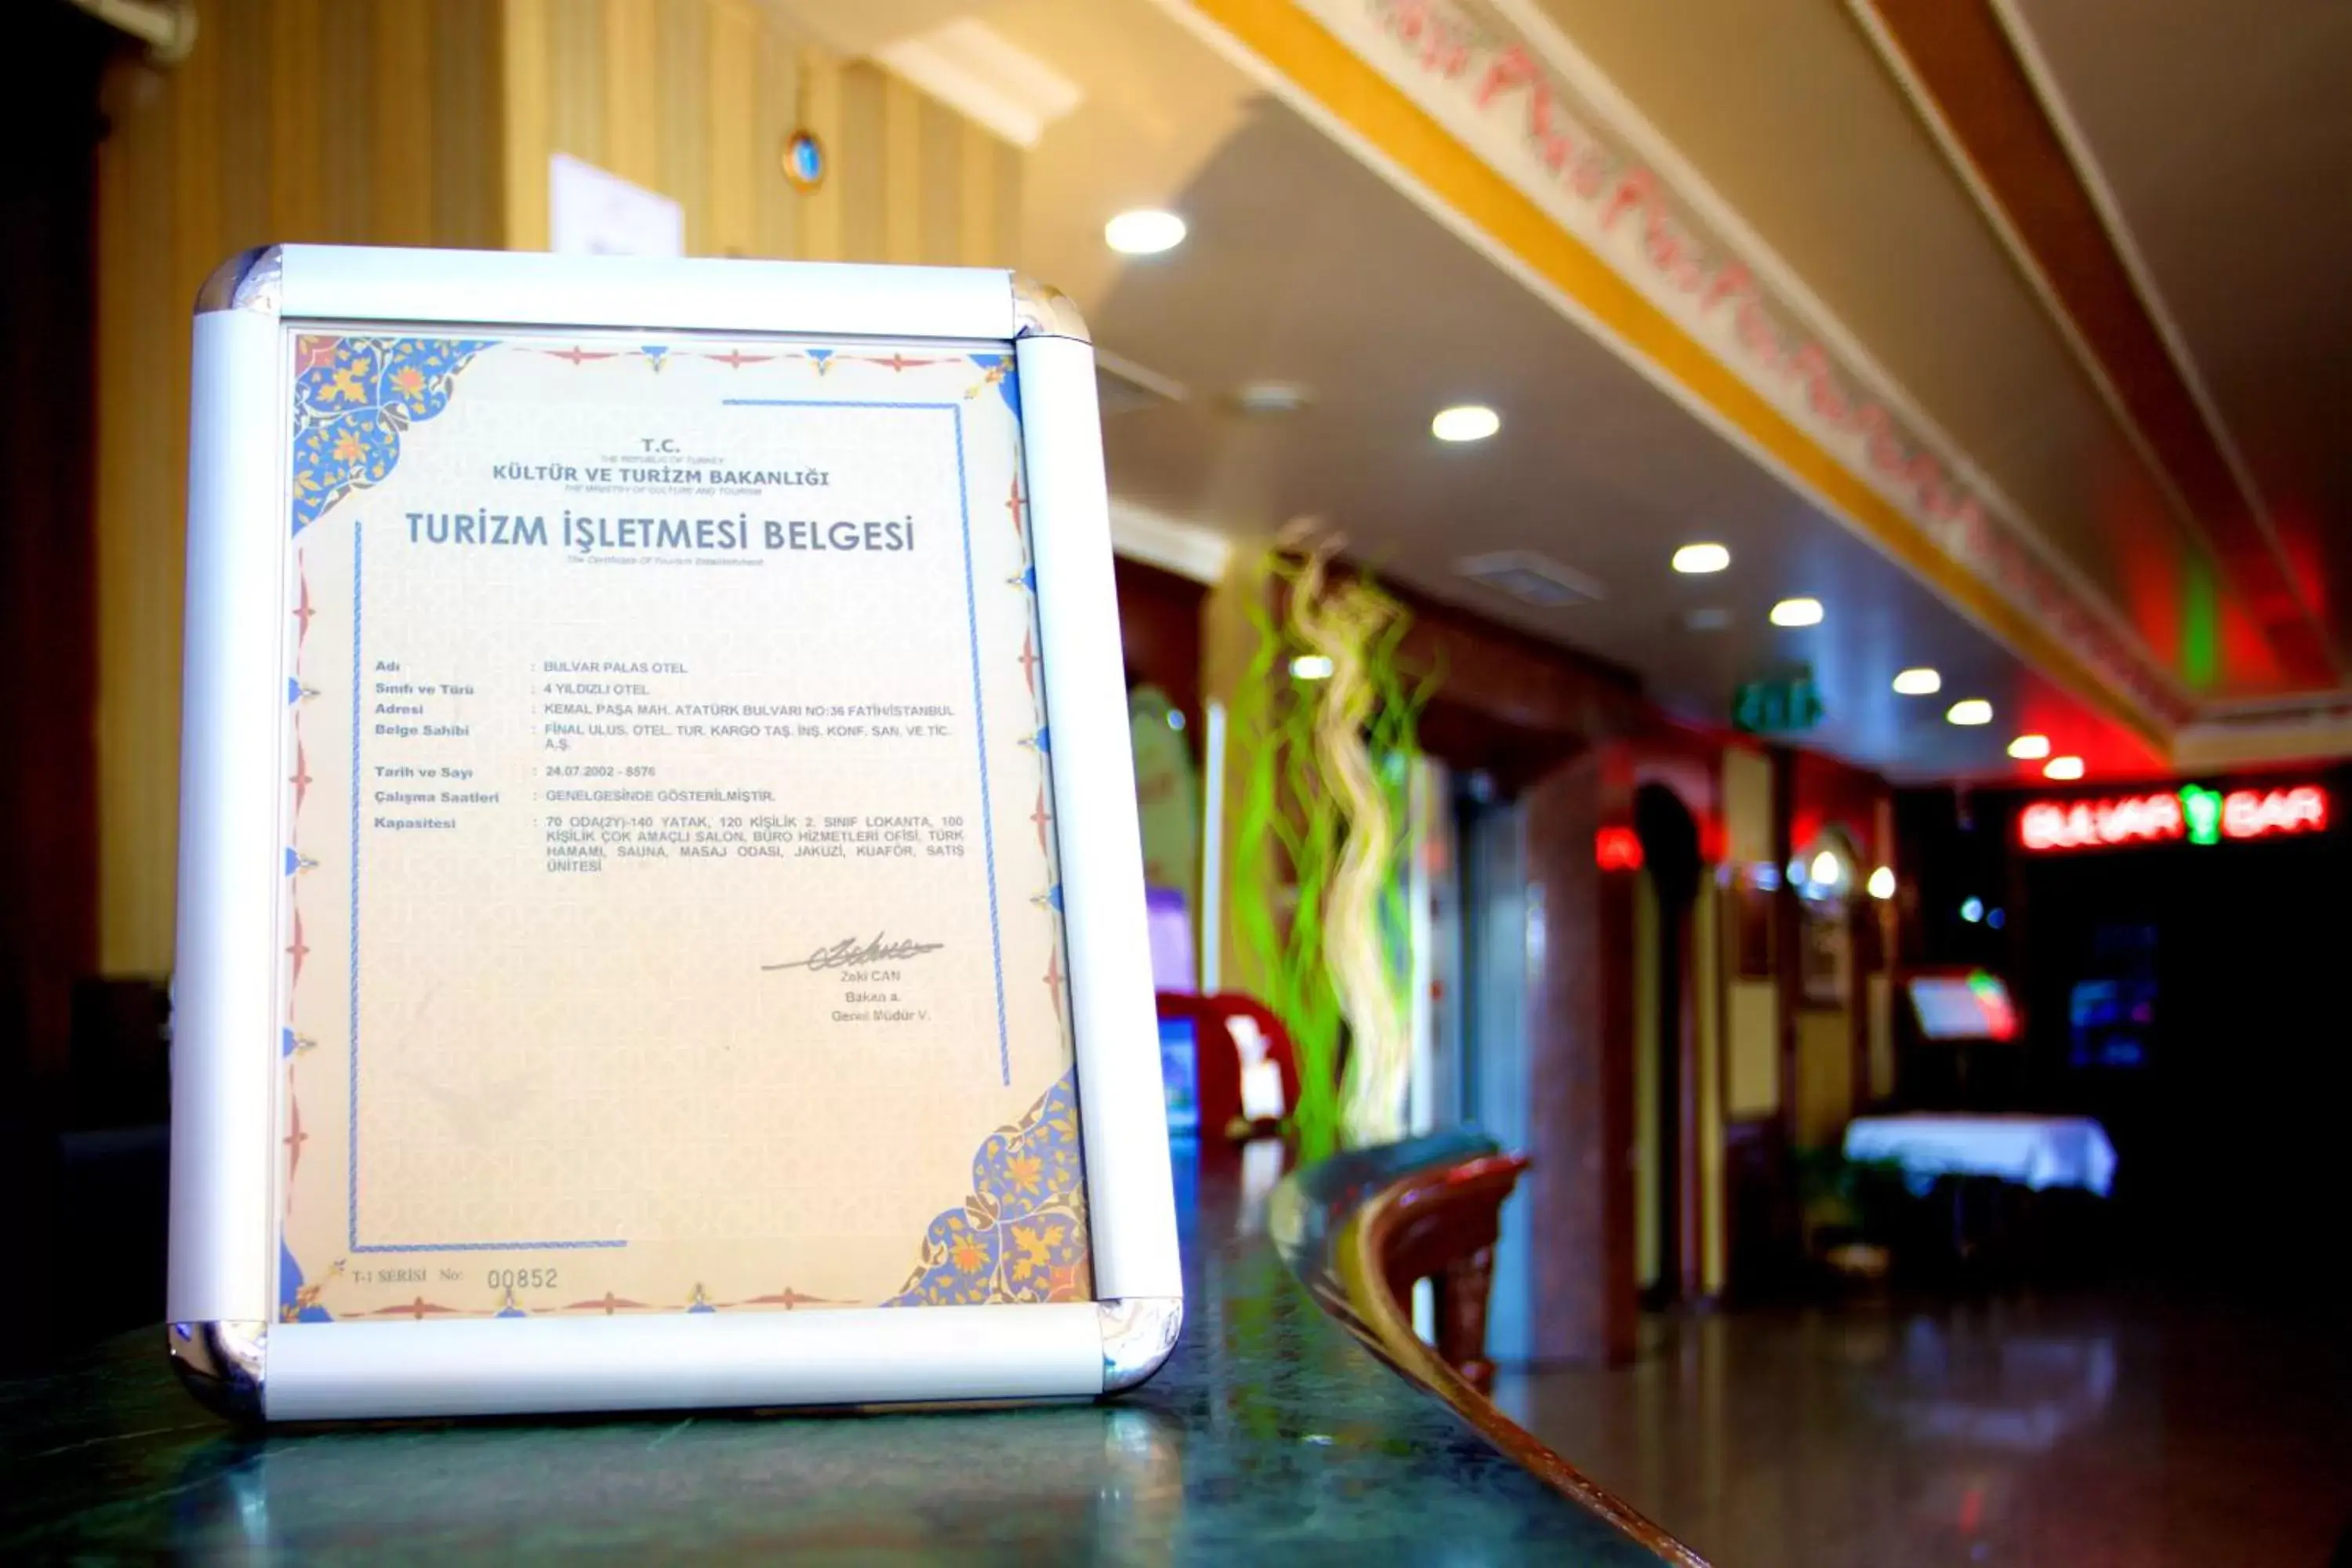 Certificate/Award in Hotel Bulvar Palas